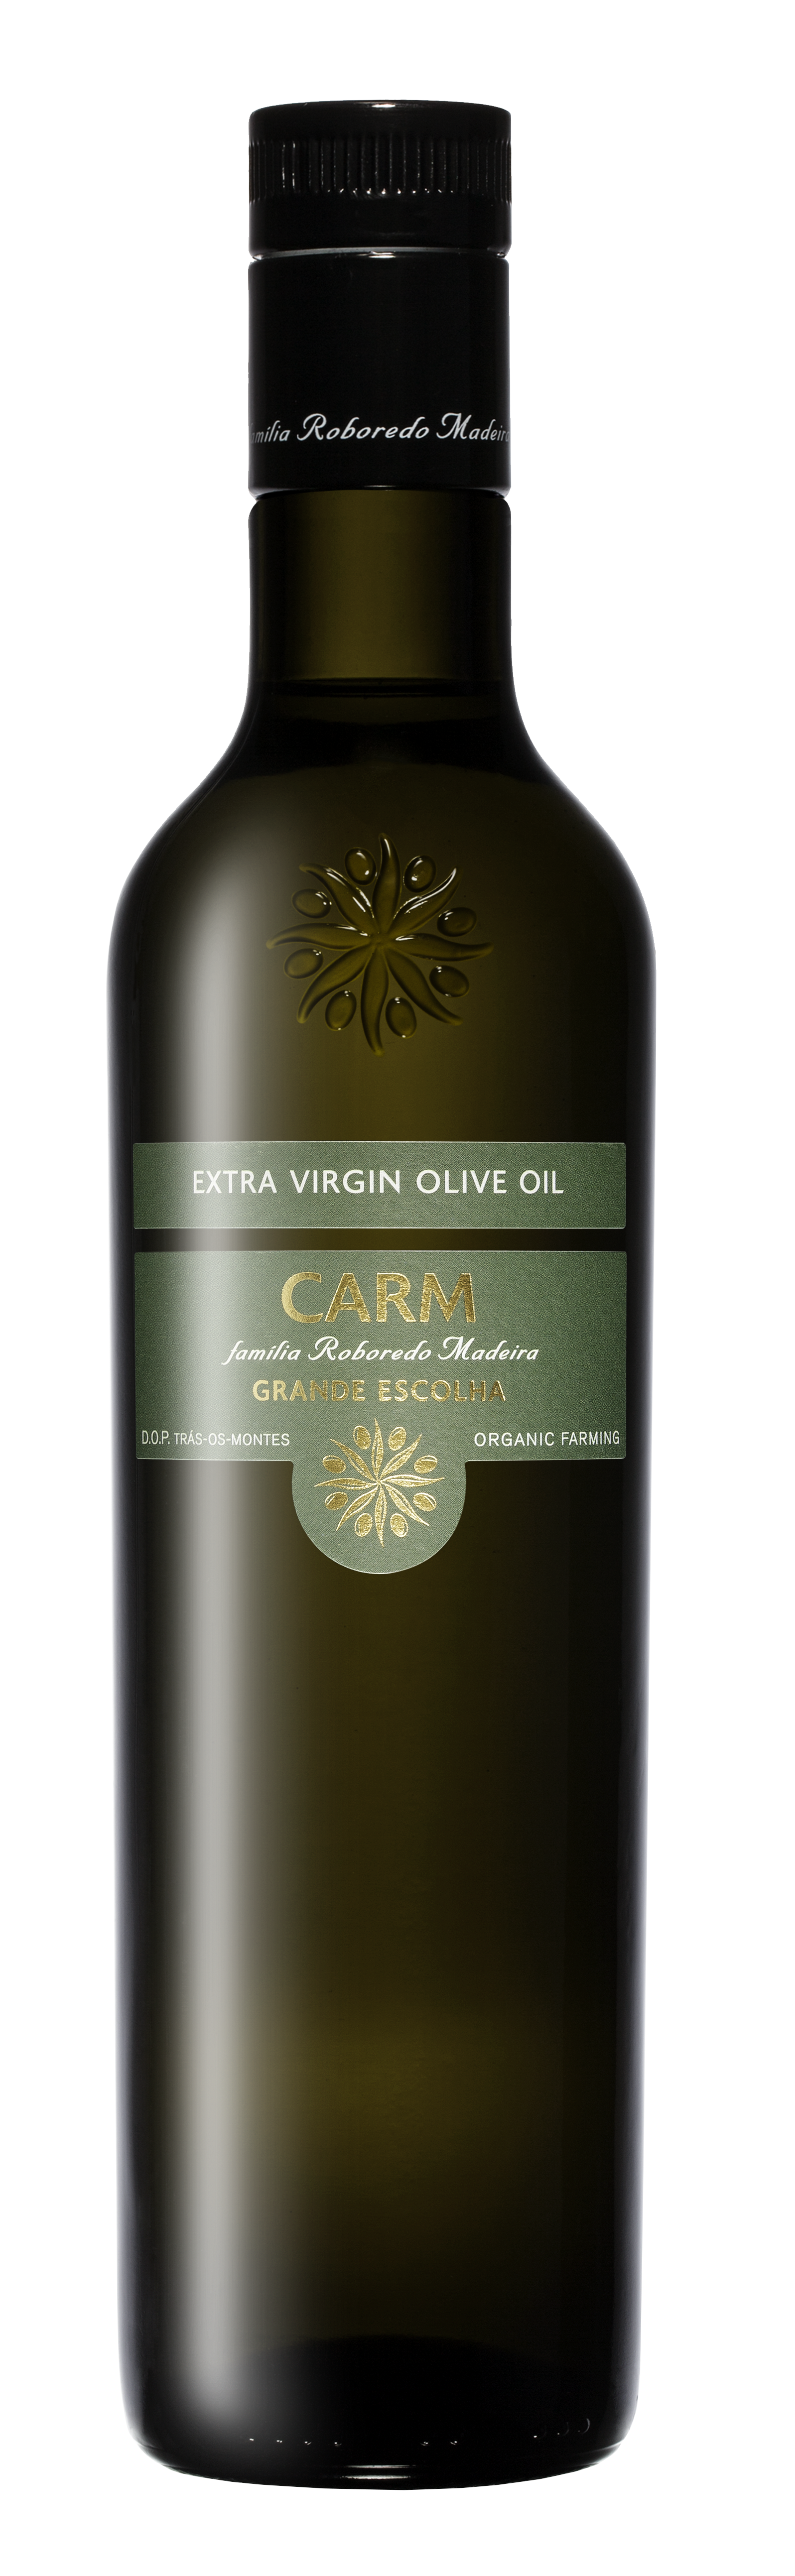 Carm Grande Escolha BIO Extra Virgin Olive Oil 0